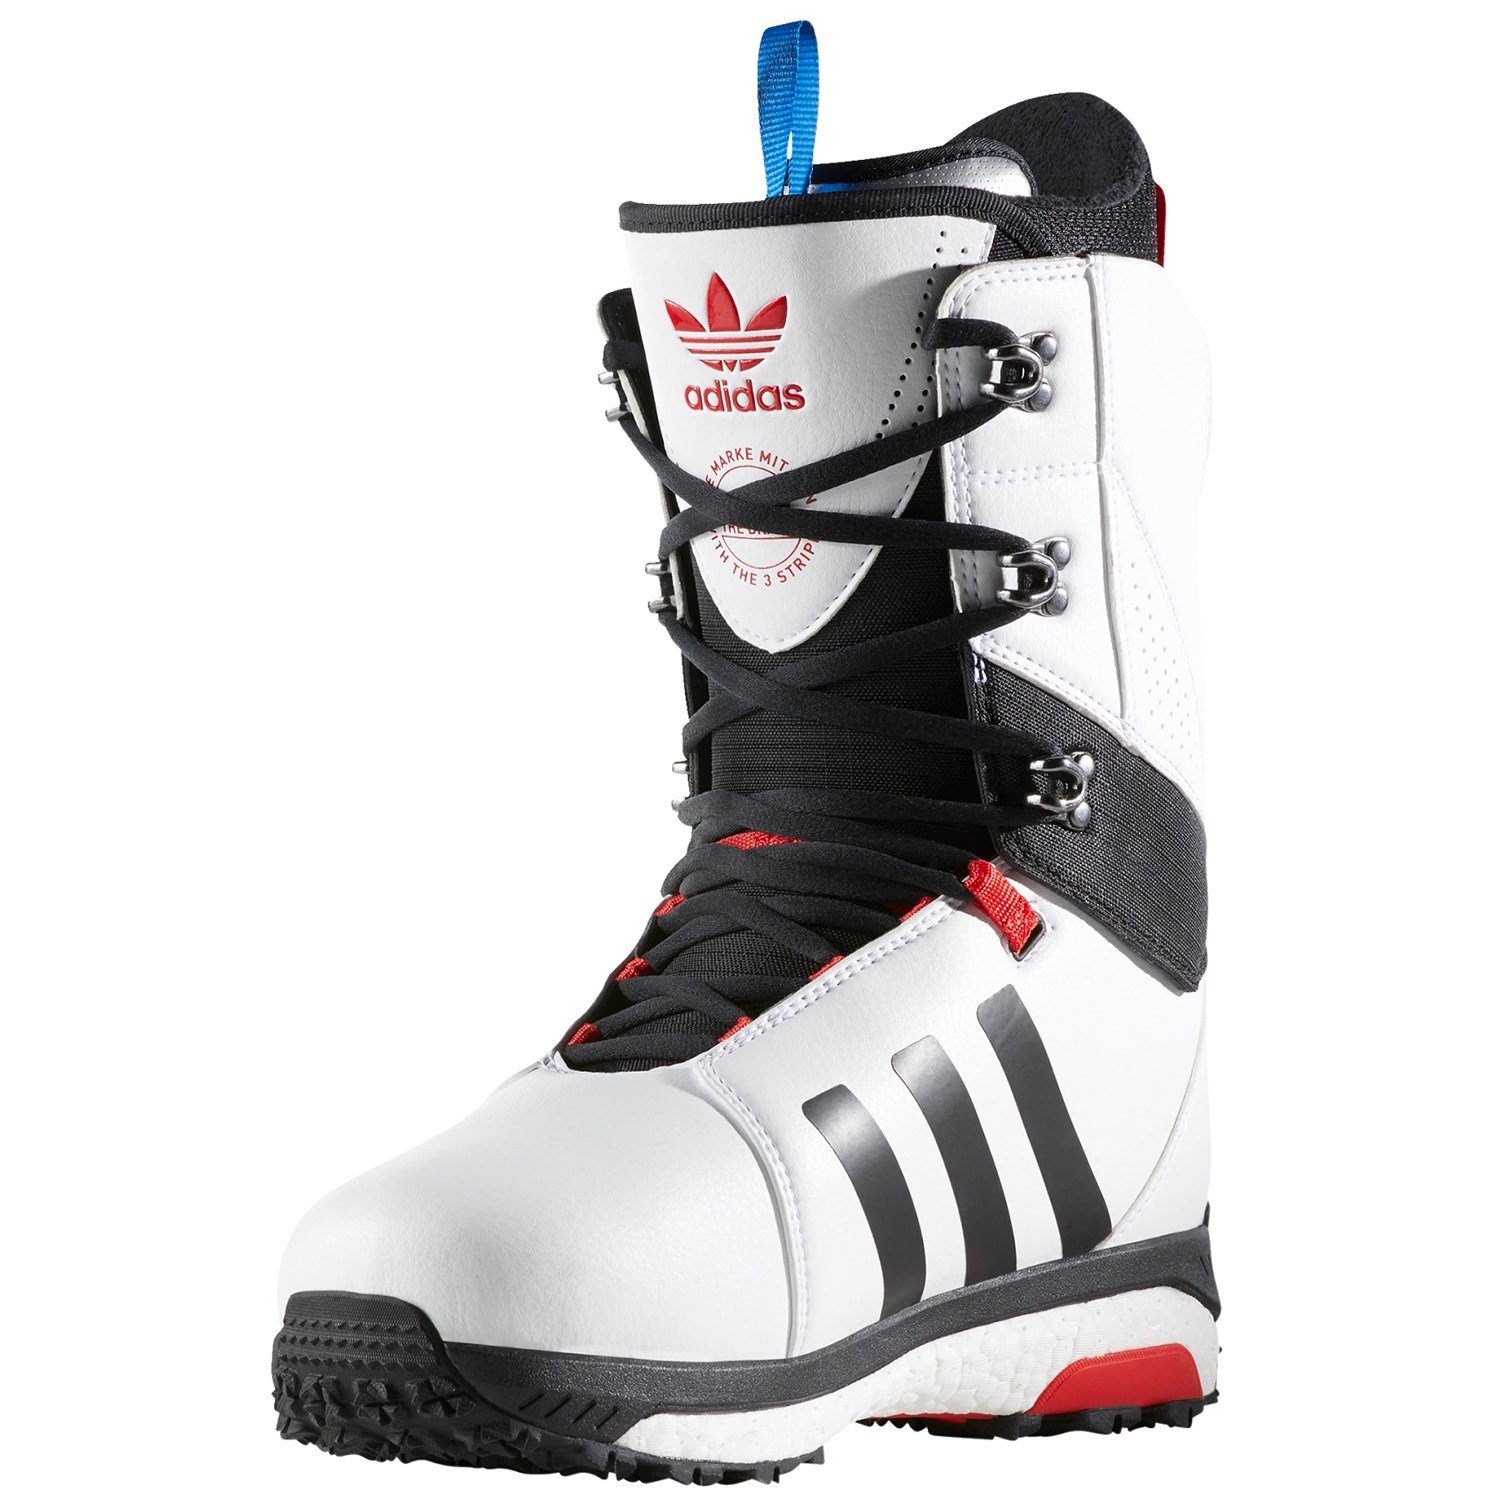 adidas snowboard boots 2018